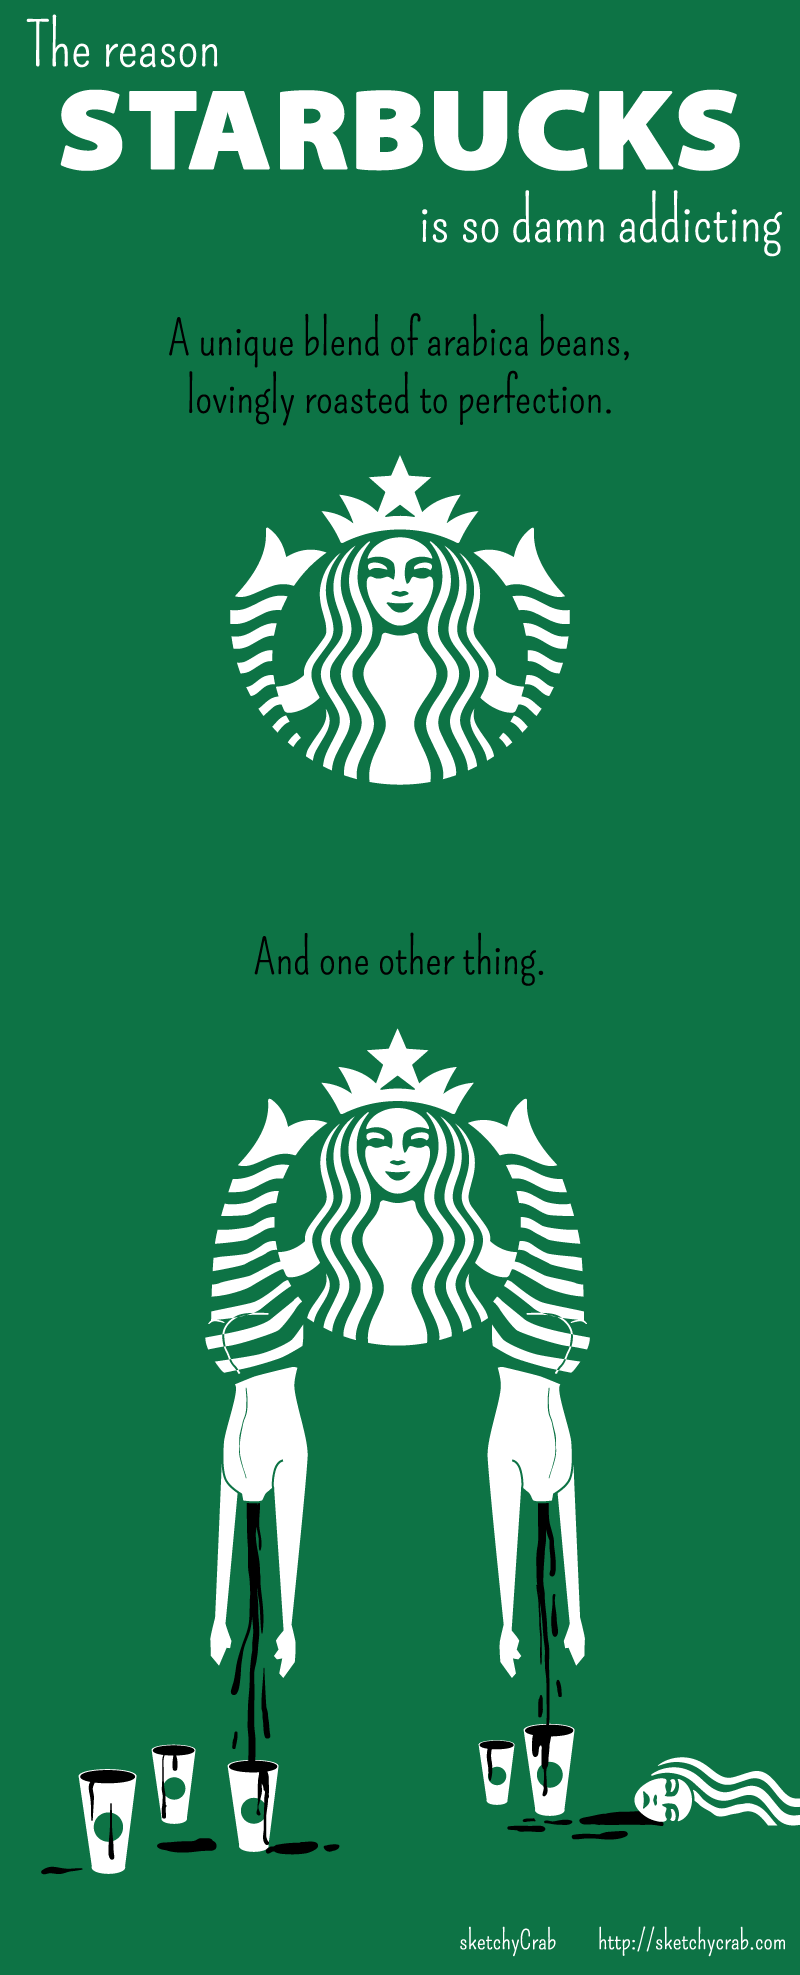 The reason Starbucks is so damn addicting.